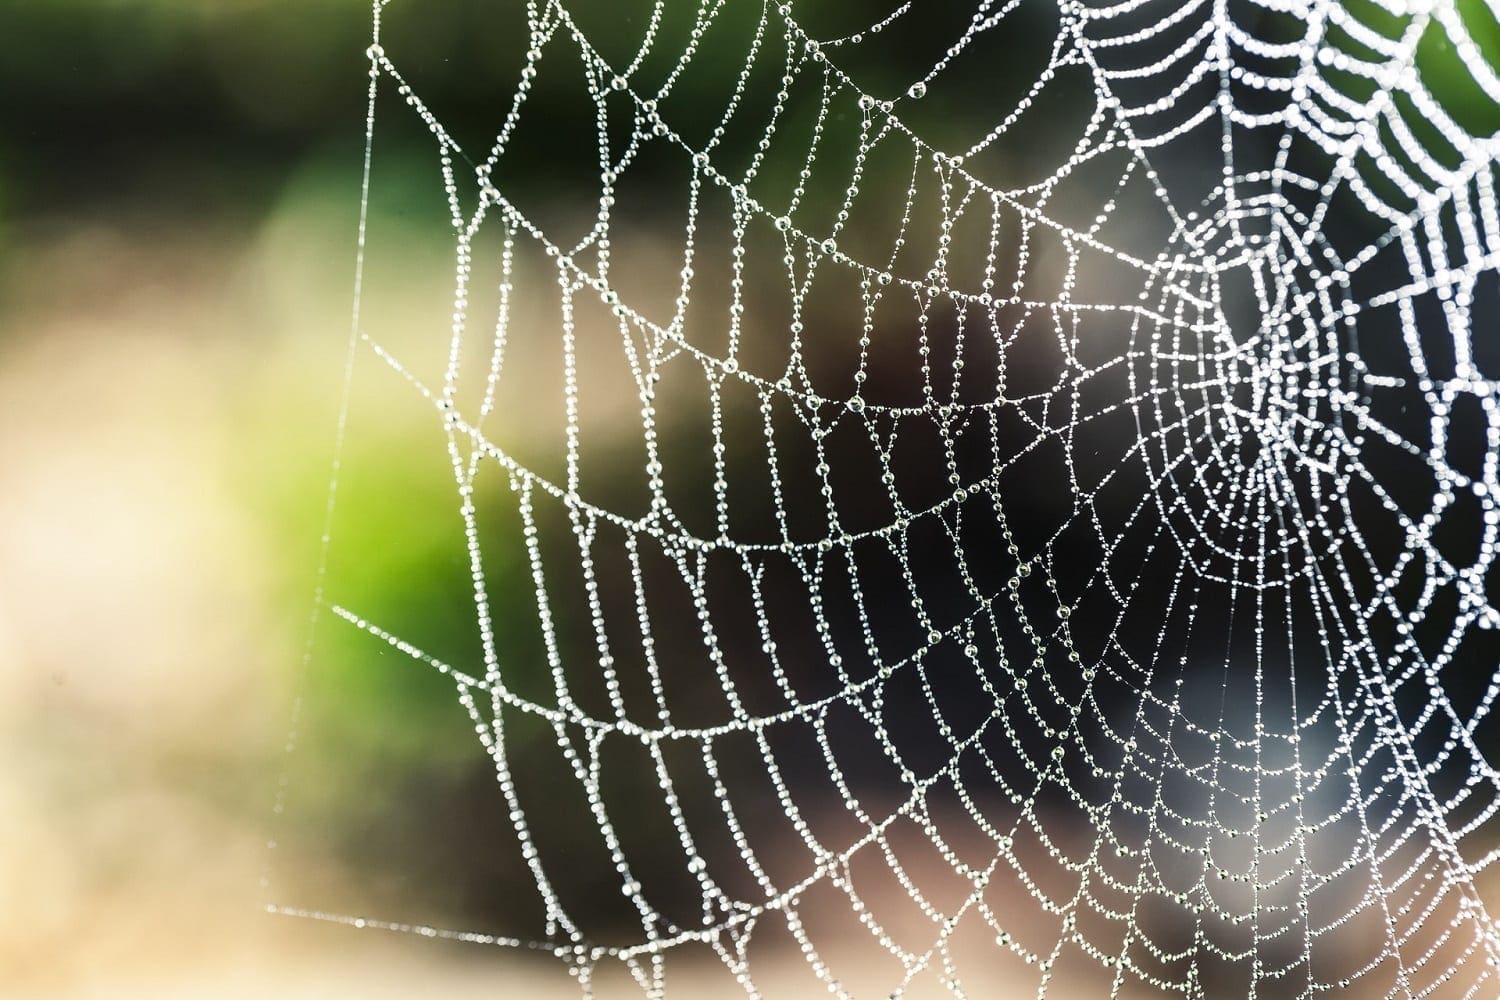 Spider web sprinkled with dew, photo credit: pexels